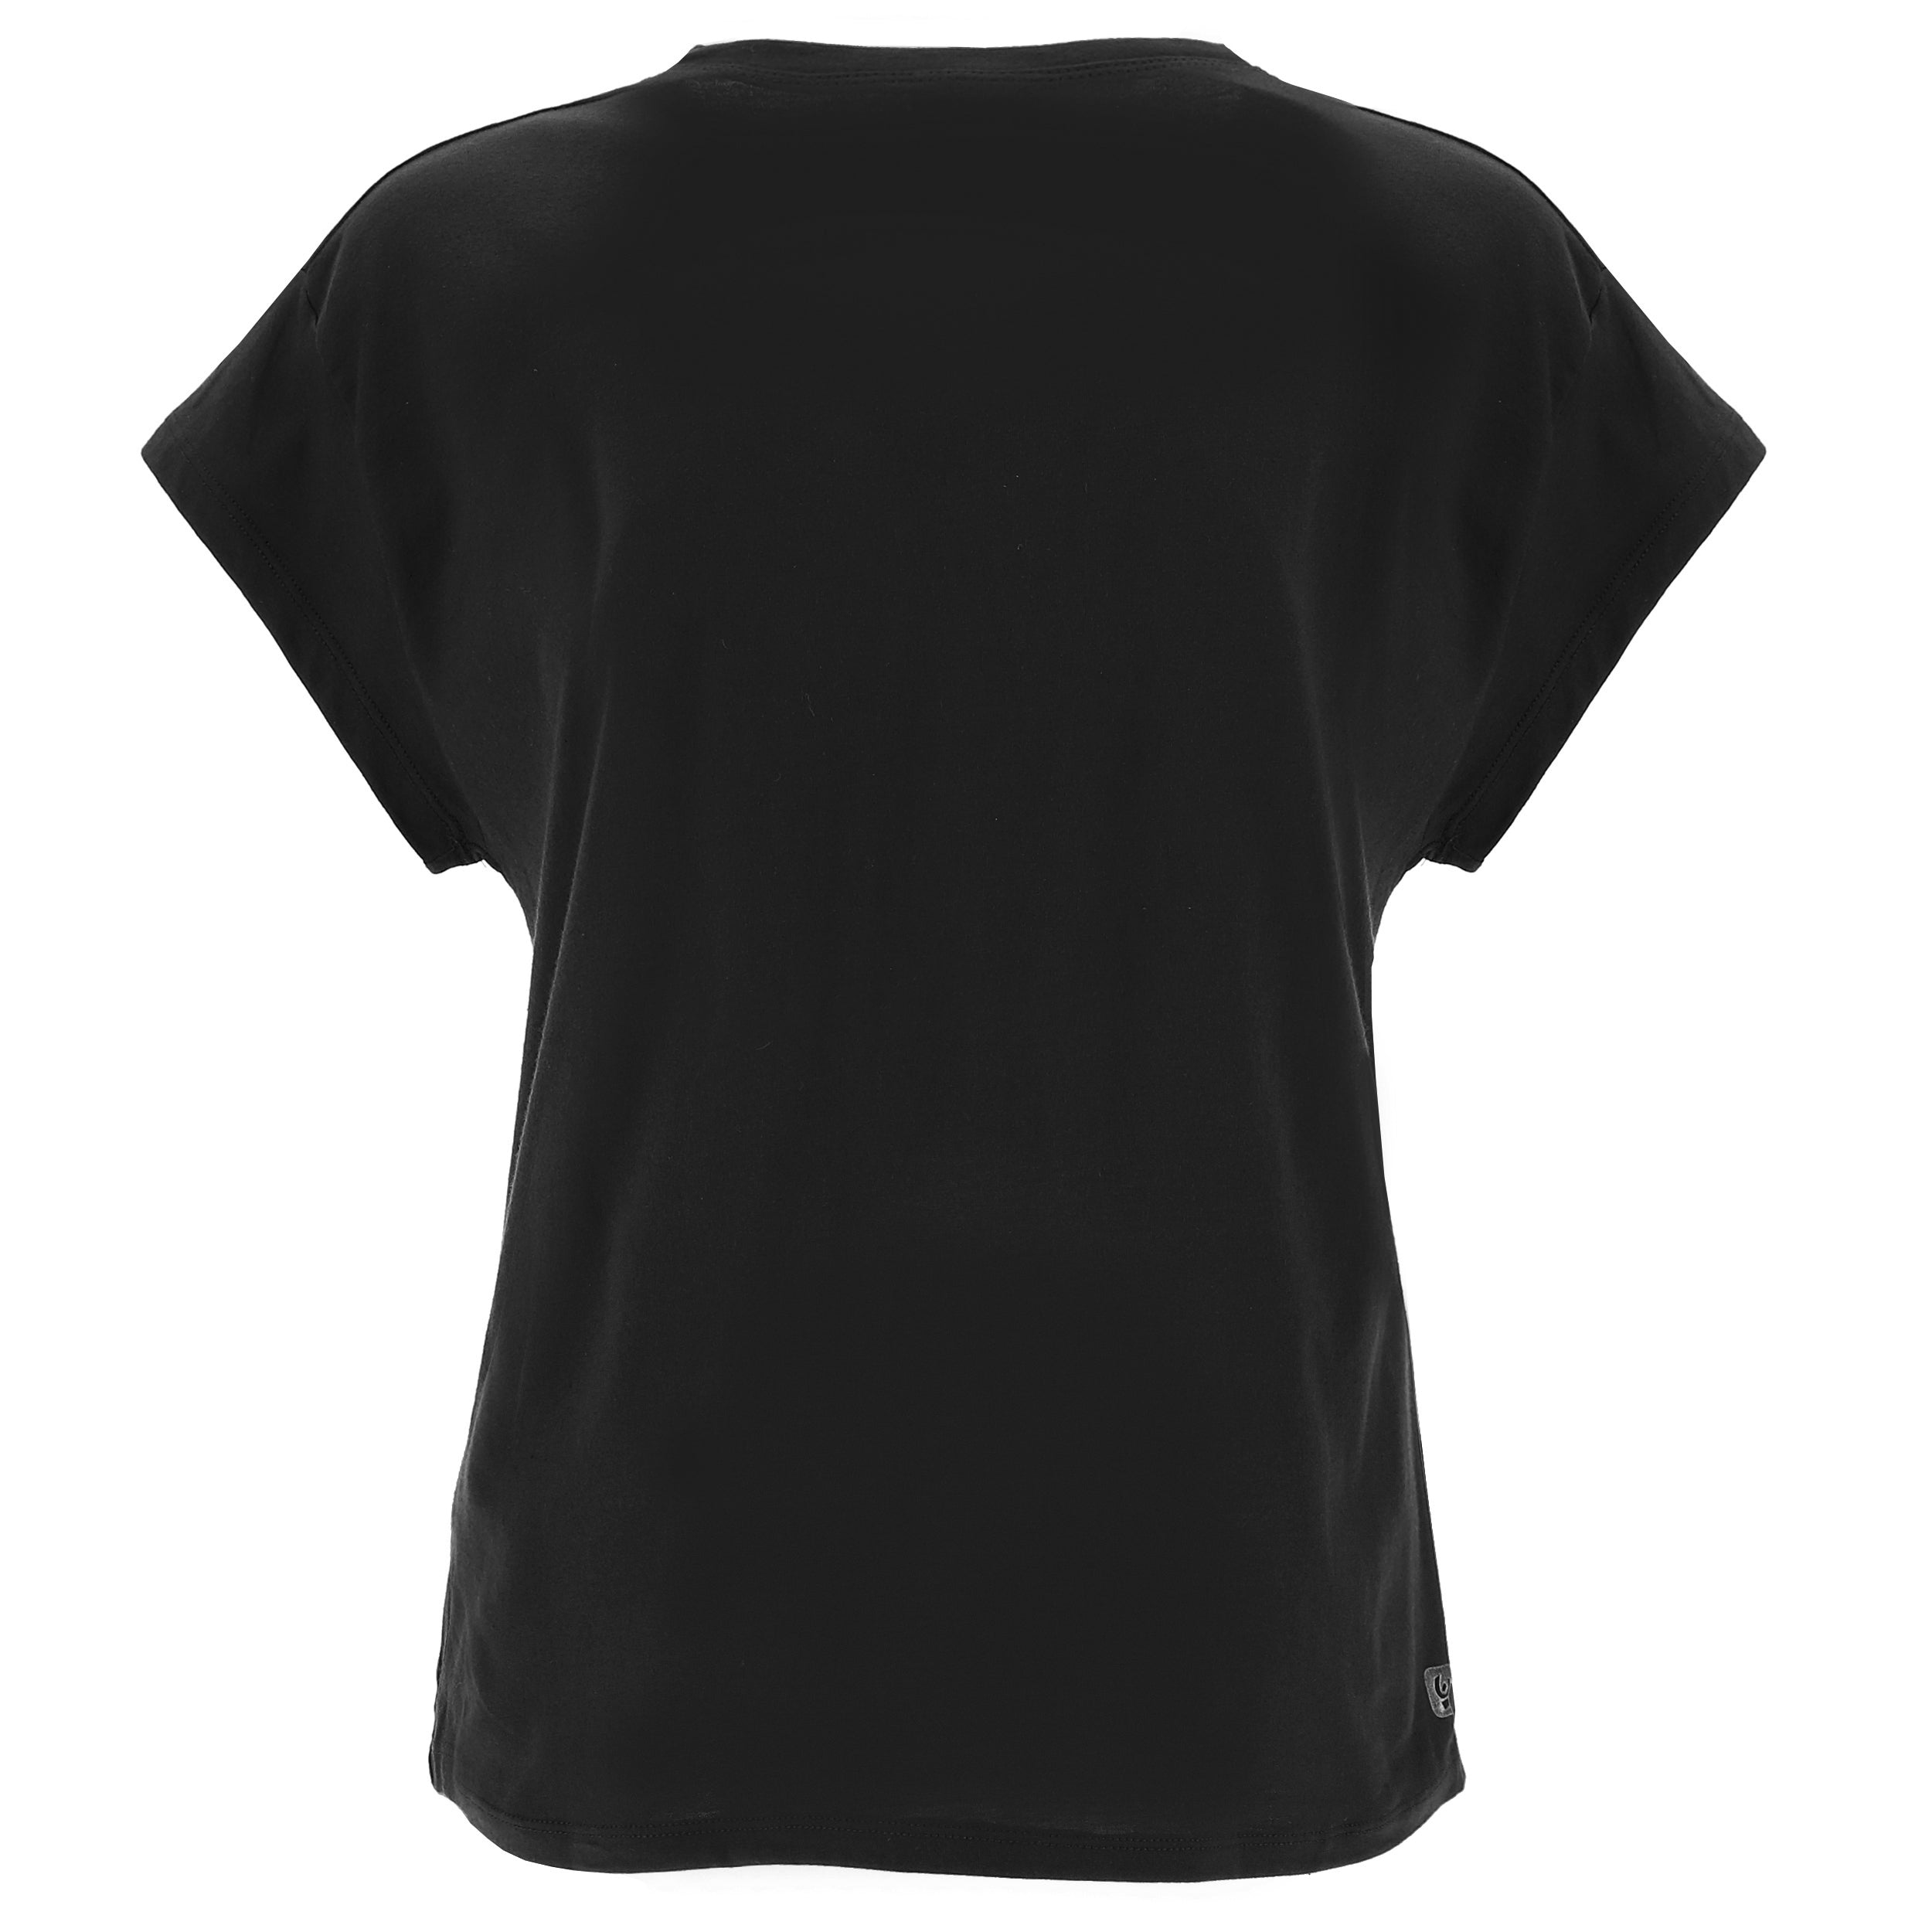 T Shirt with Ultrashort Sleeves - Black + Gold Glitter Print 2